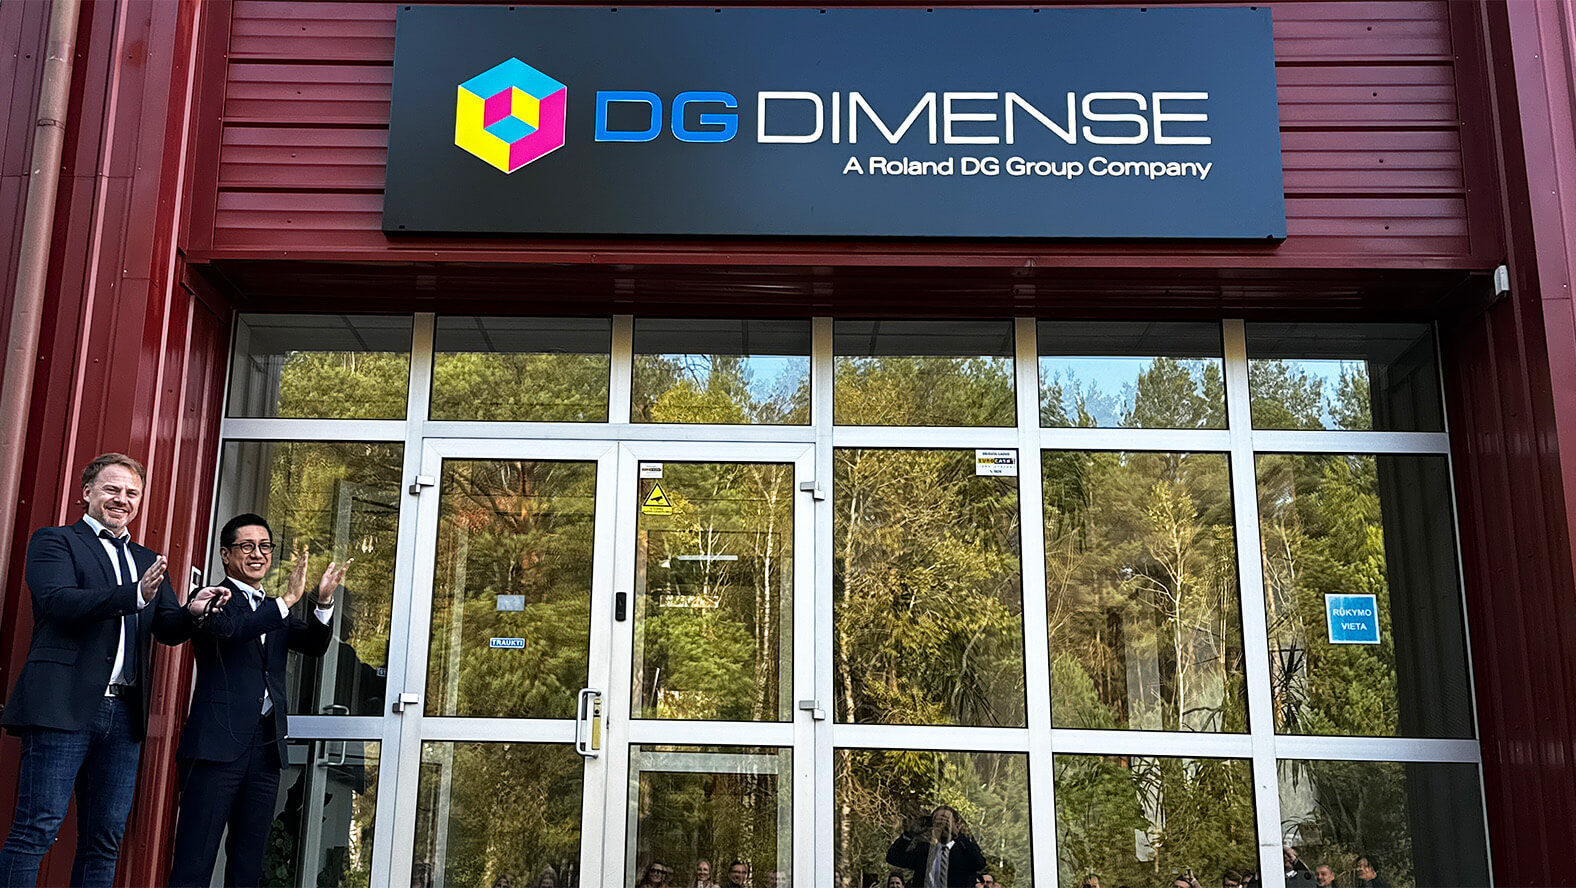 The DG DIMENSE headquarters